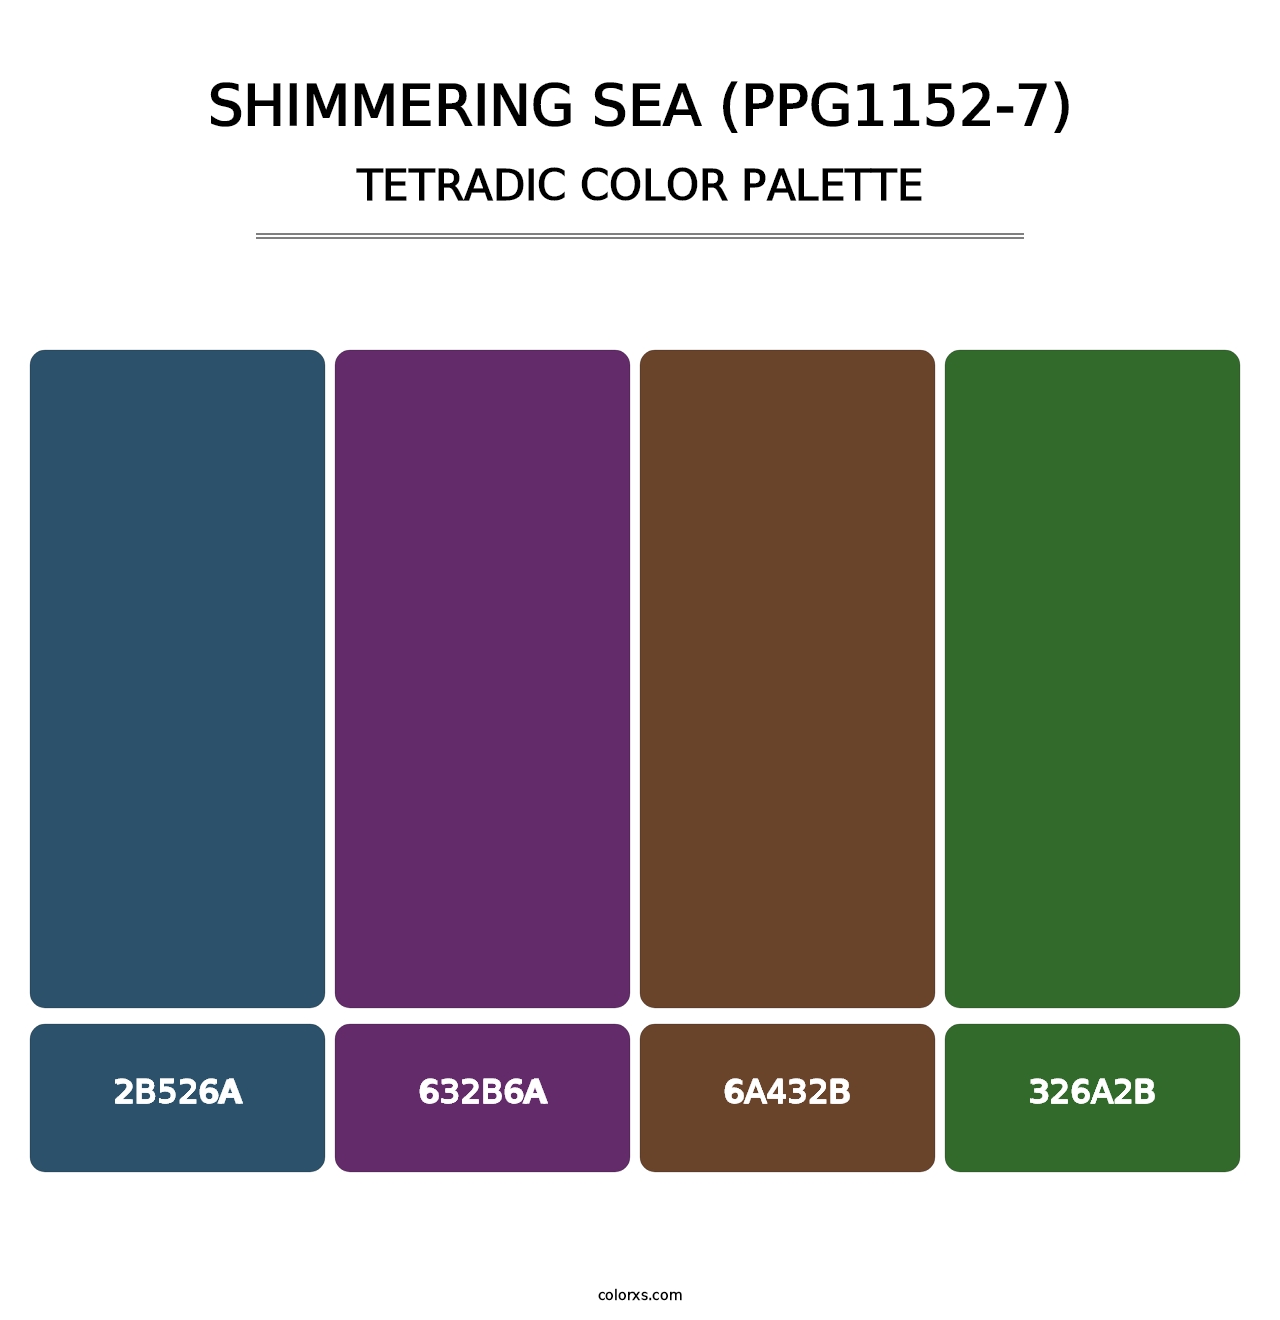 Shimmering Sea (PPG1152-7) - Tetradic Color Palette